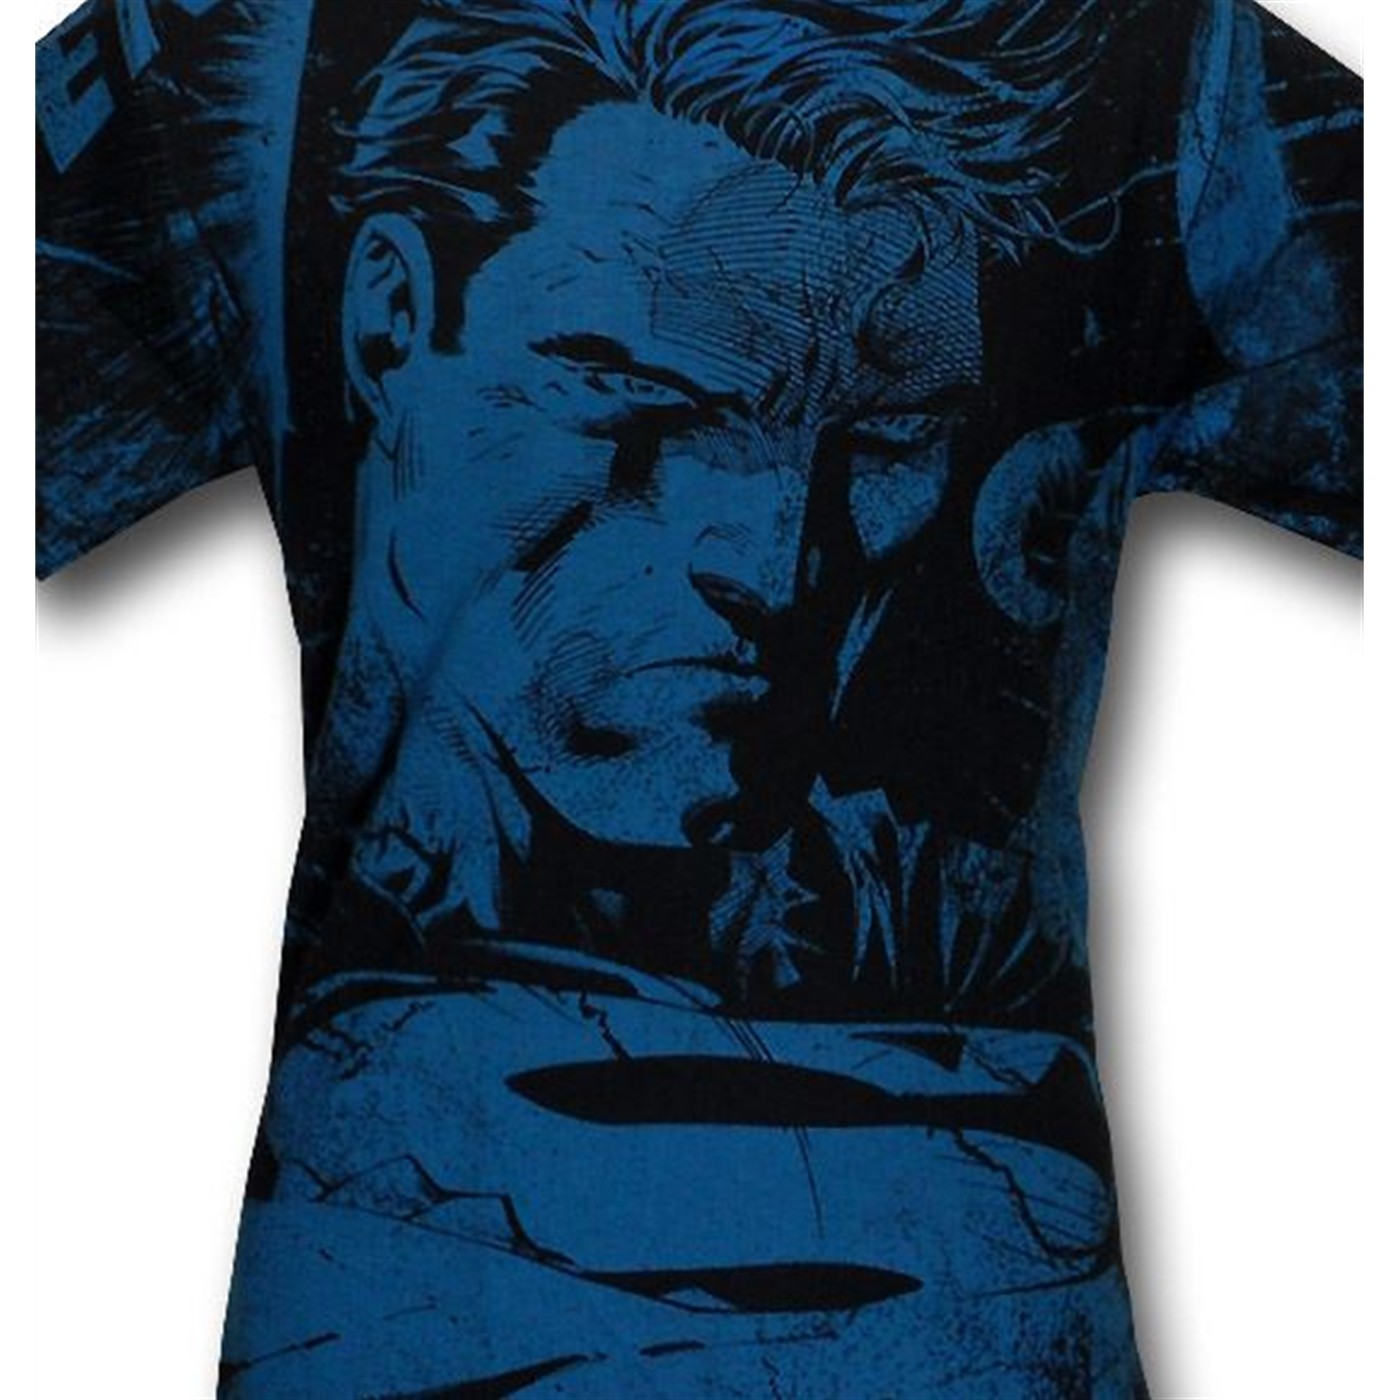 Superman Cosmic Concerns Sublimation T-Shirt